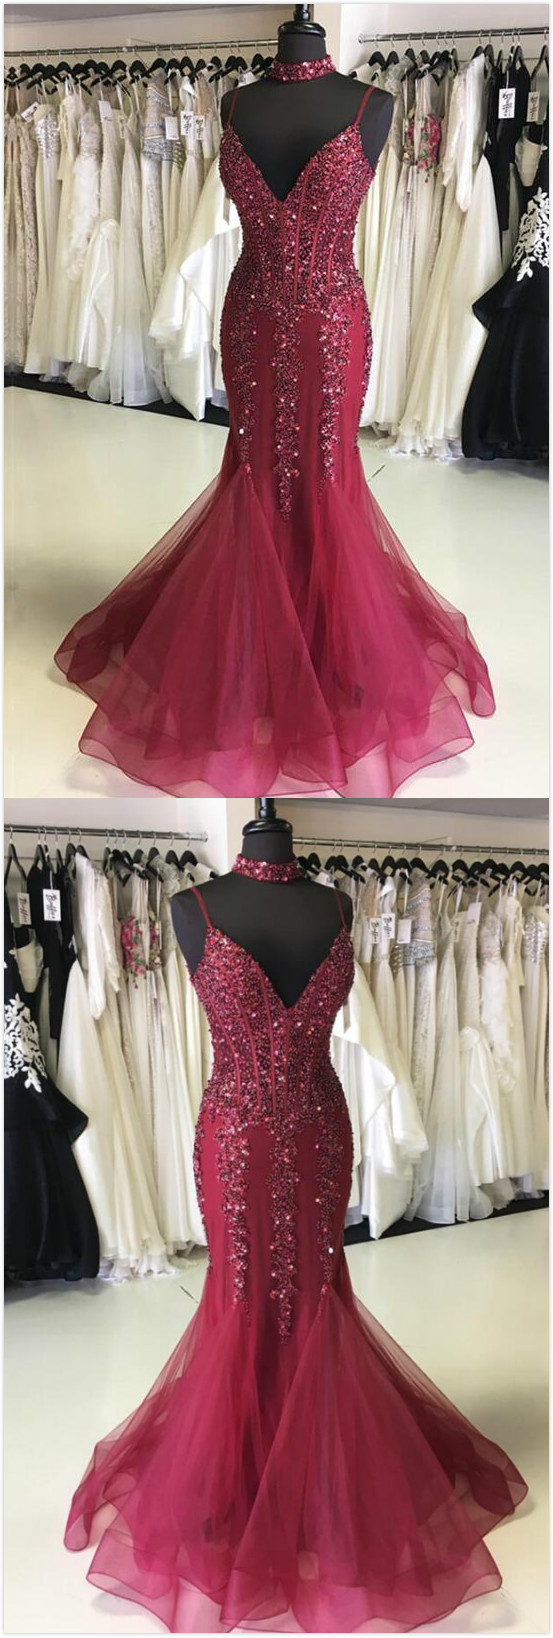 Spaghetti Strap Sexy Prom Dress, Cheap Prom Dress,tulle Prom Dress,V Neck Beaded Prom Dress,Mermaid Long Prom Dress, Evening Dress Featuring Choker Necklace 